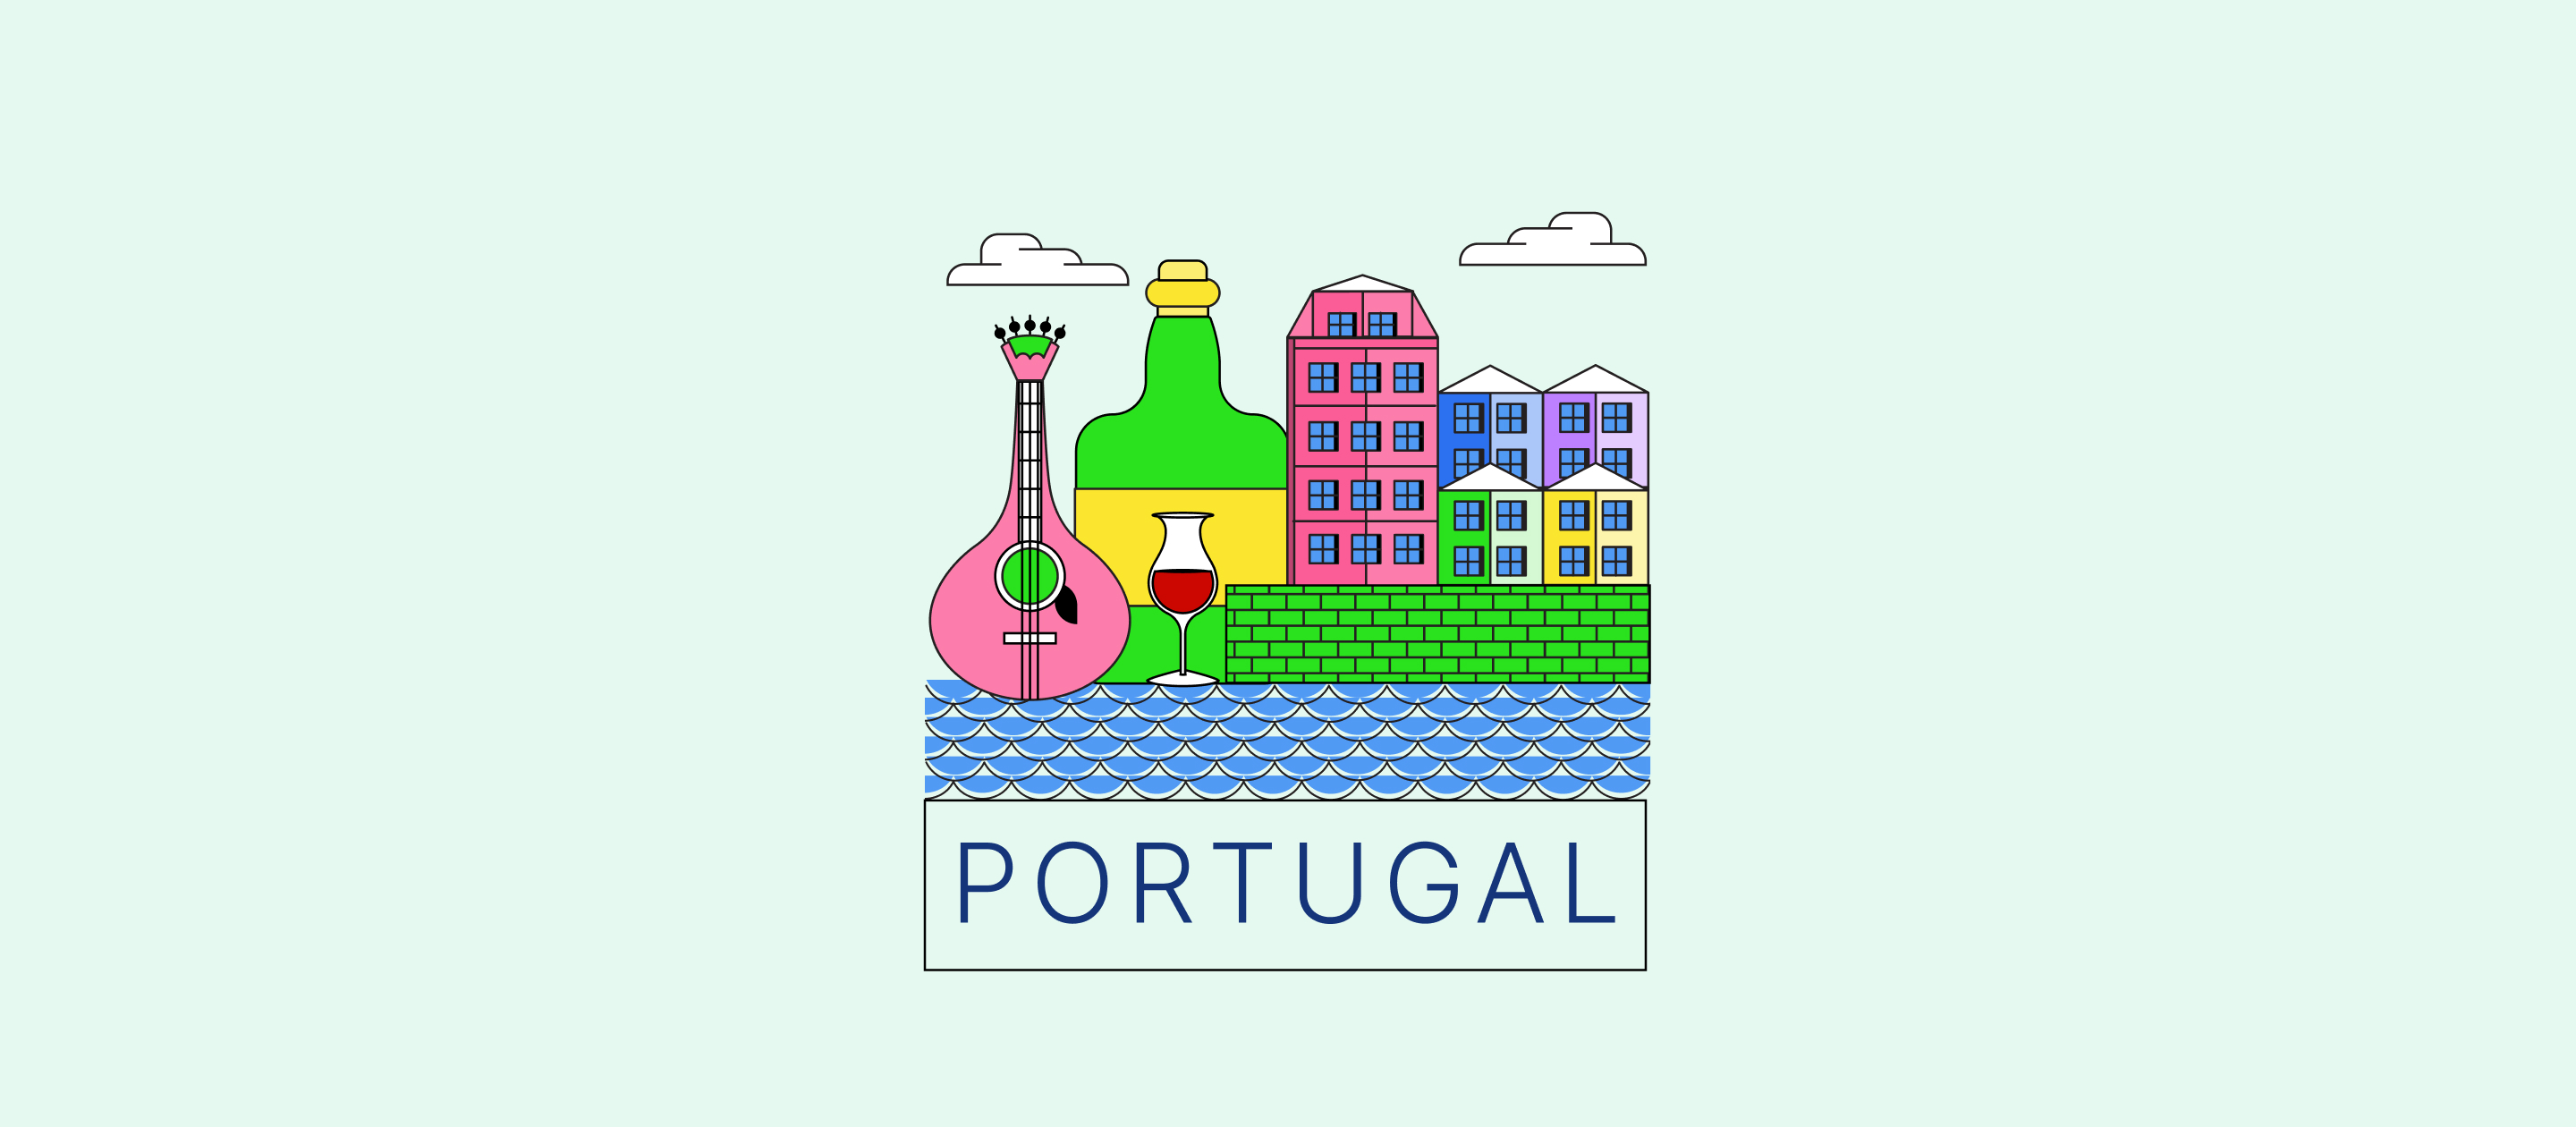 S'installer au Portugal : le guide complet de l'expat et du digital nomade